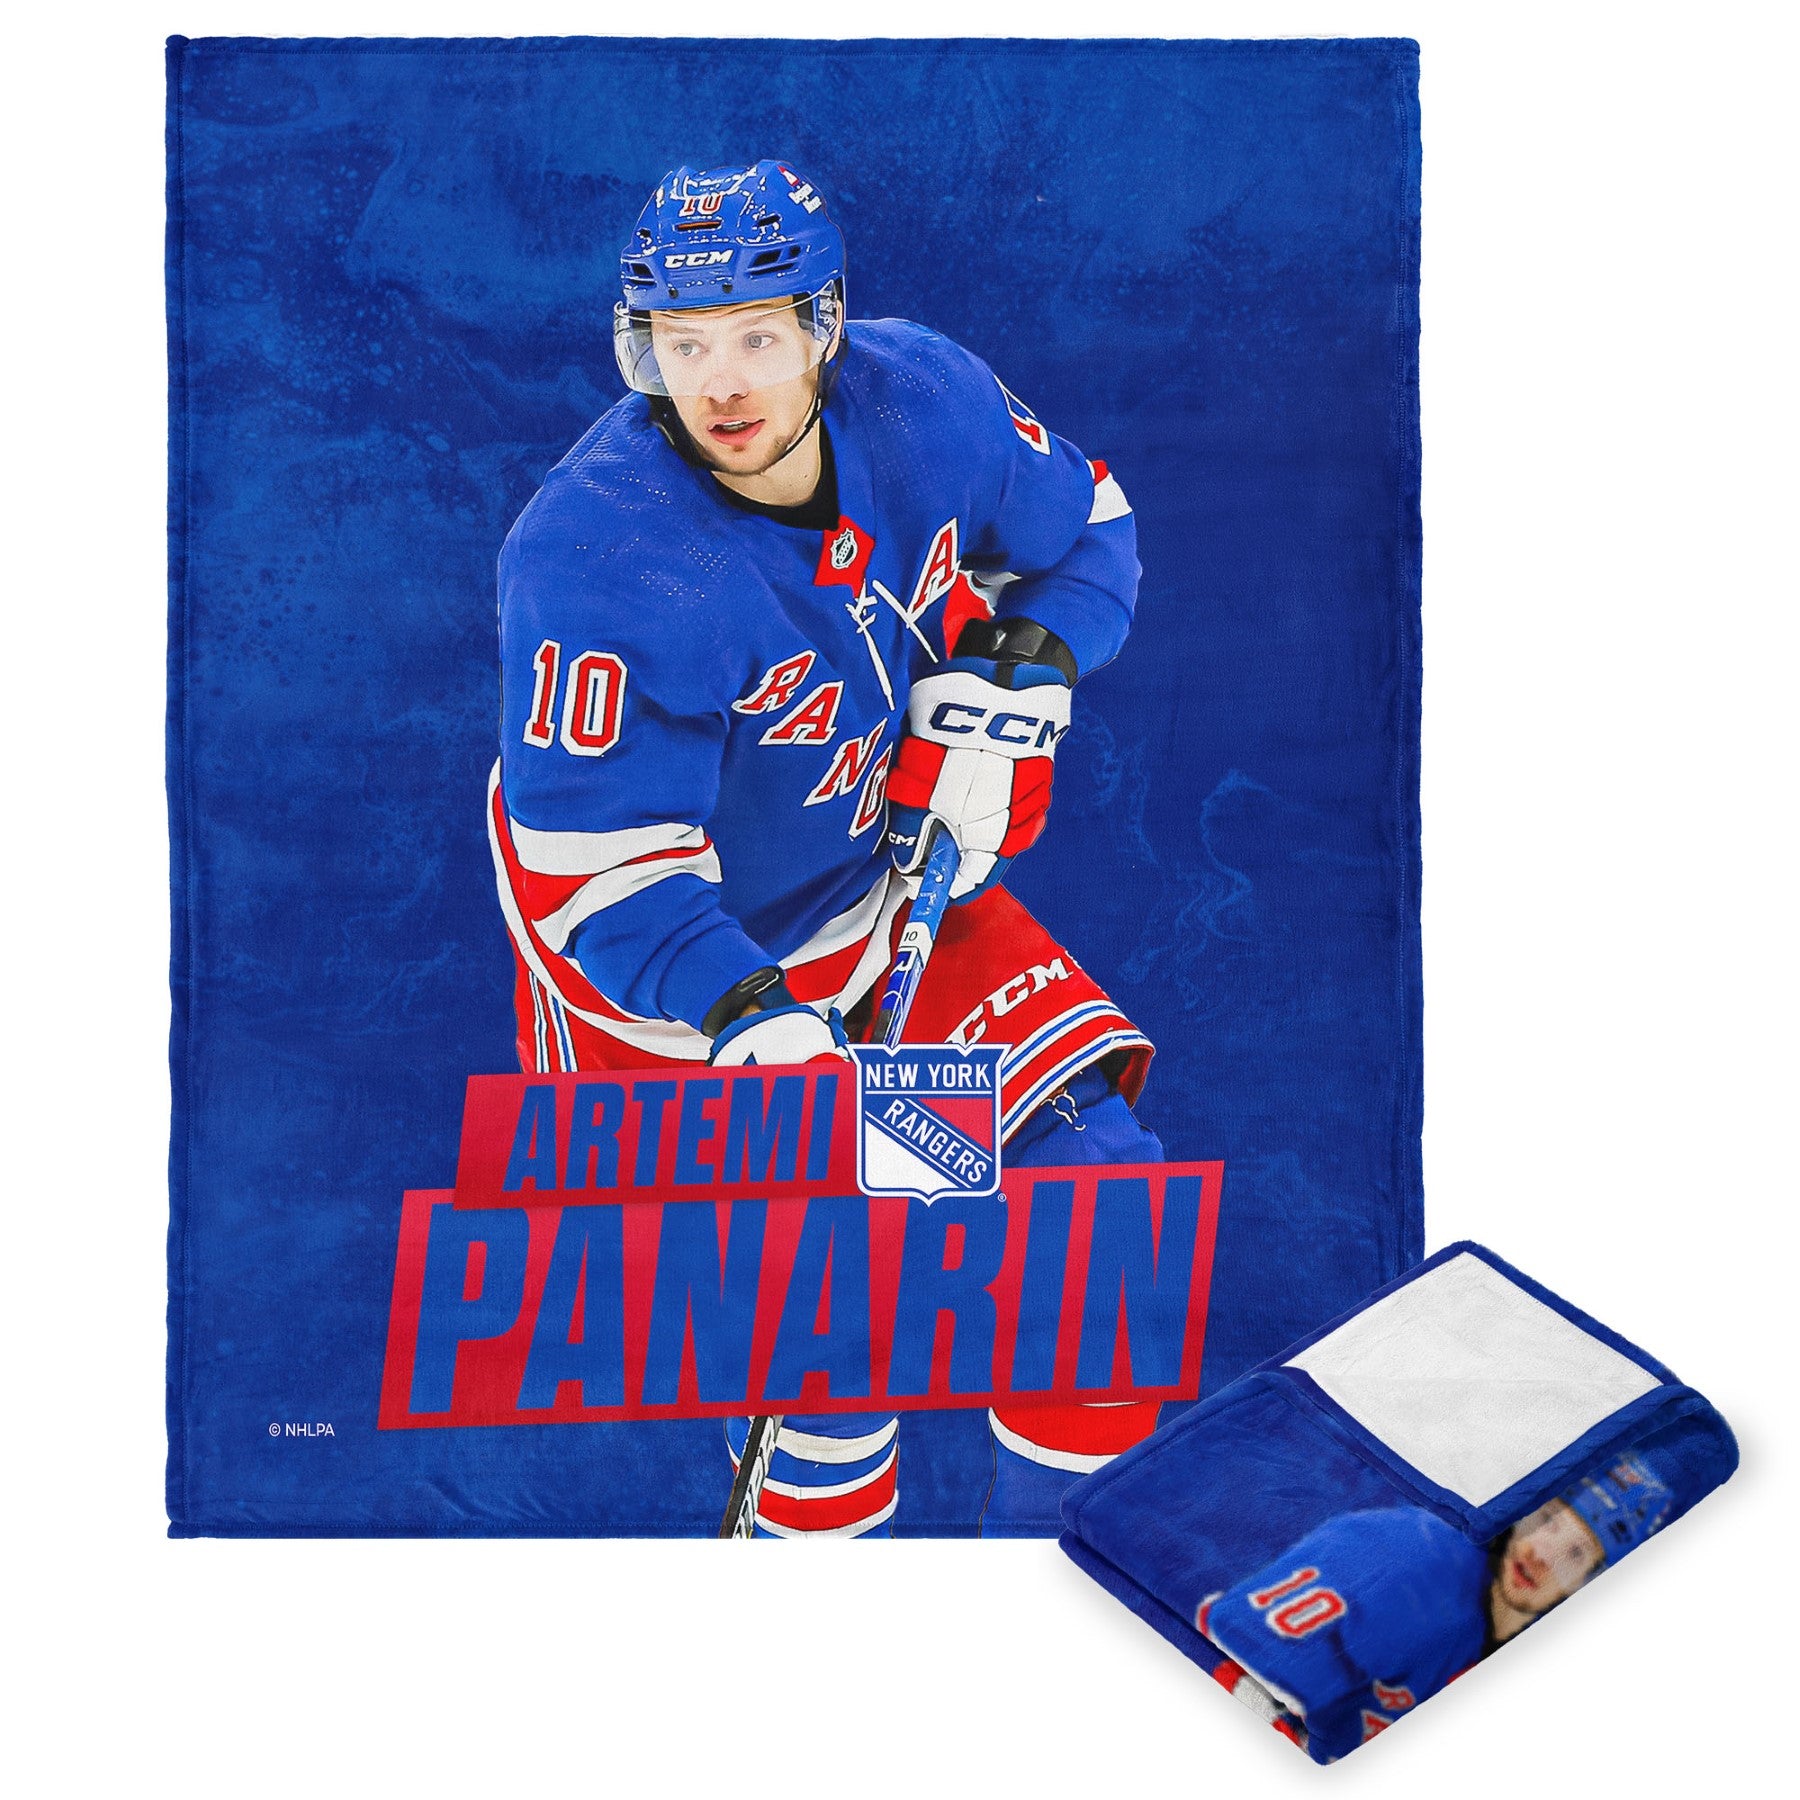 Artemi Panarin – New York Rangers NHL Player Silk Touch Throw